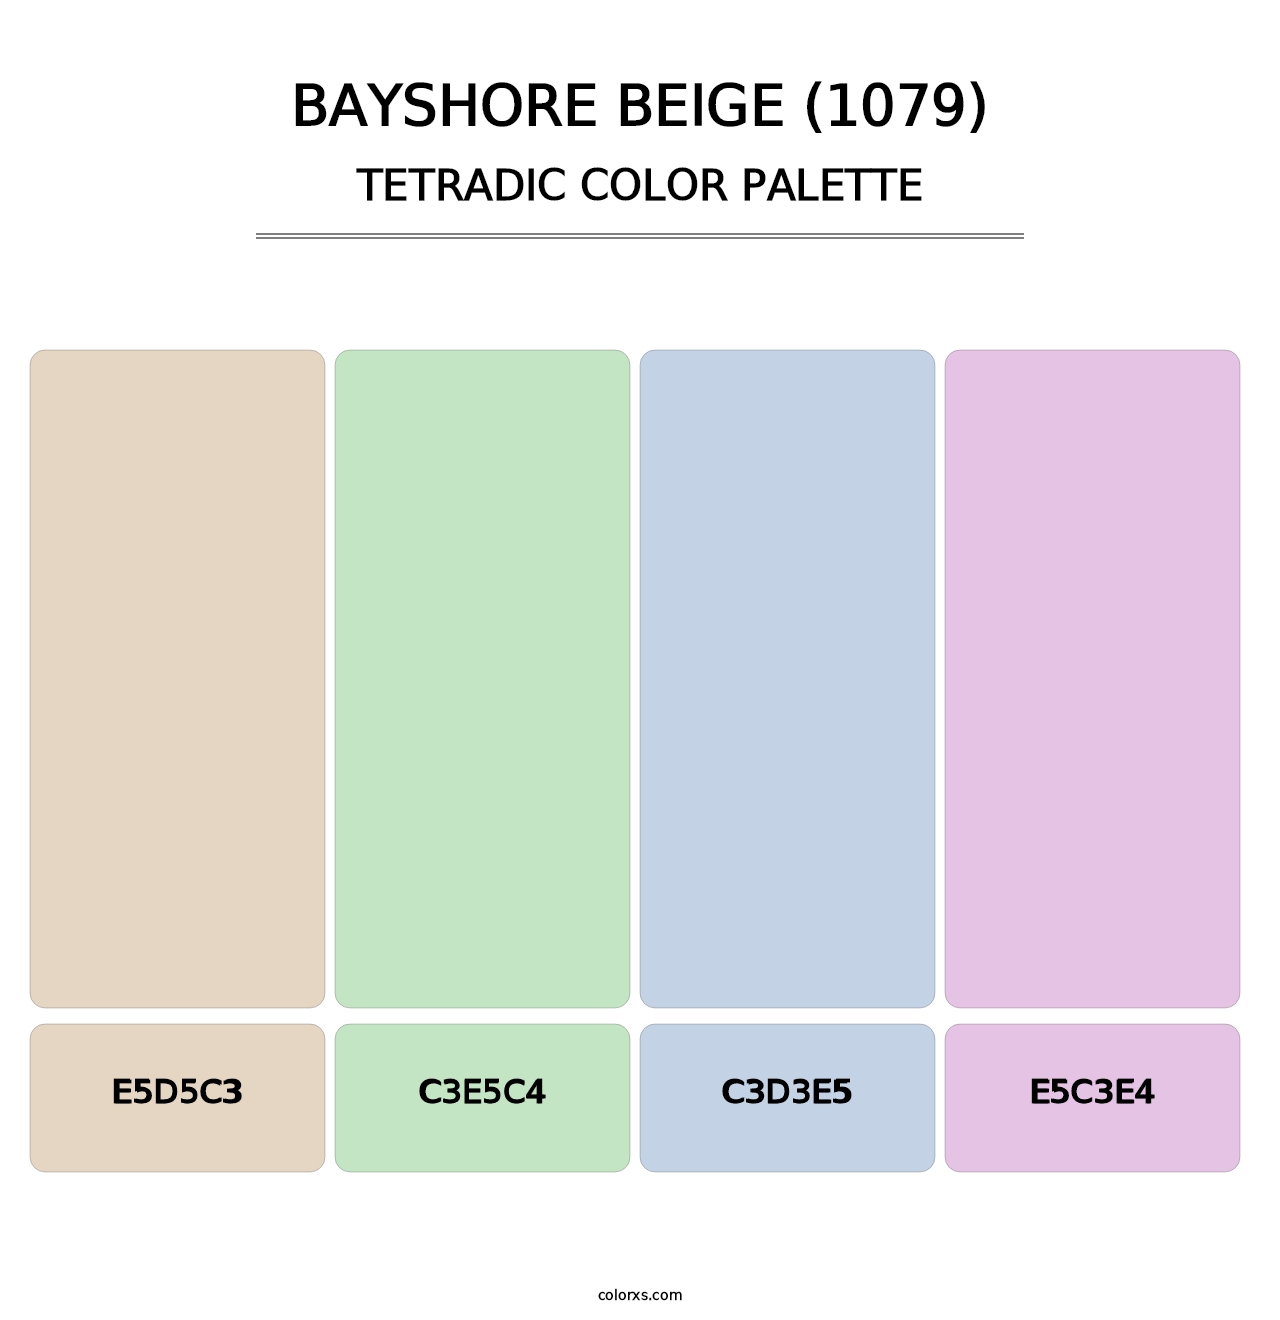 Bayshore Beige (1079) - Tetradic Color Palette